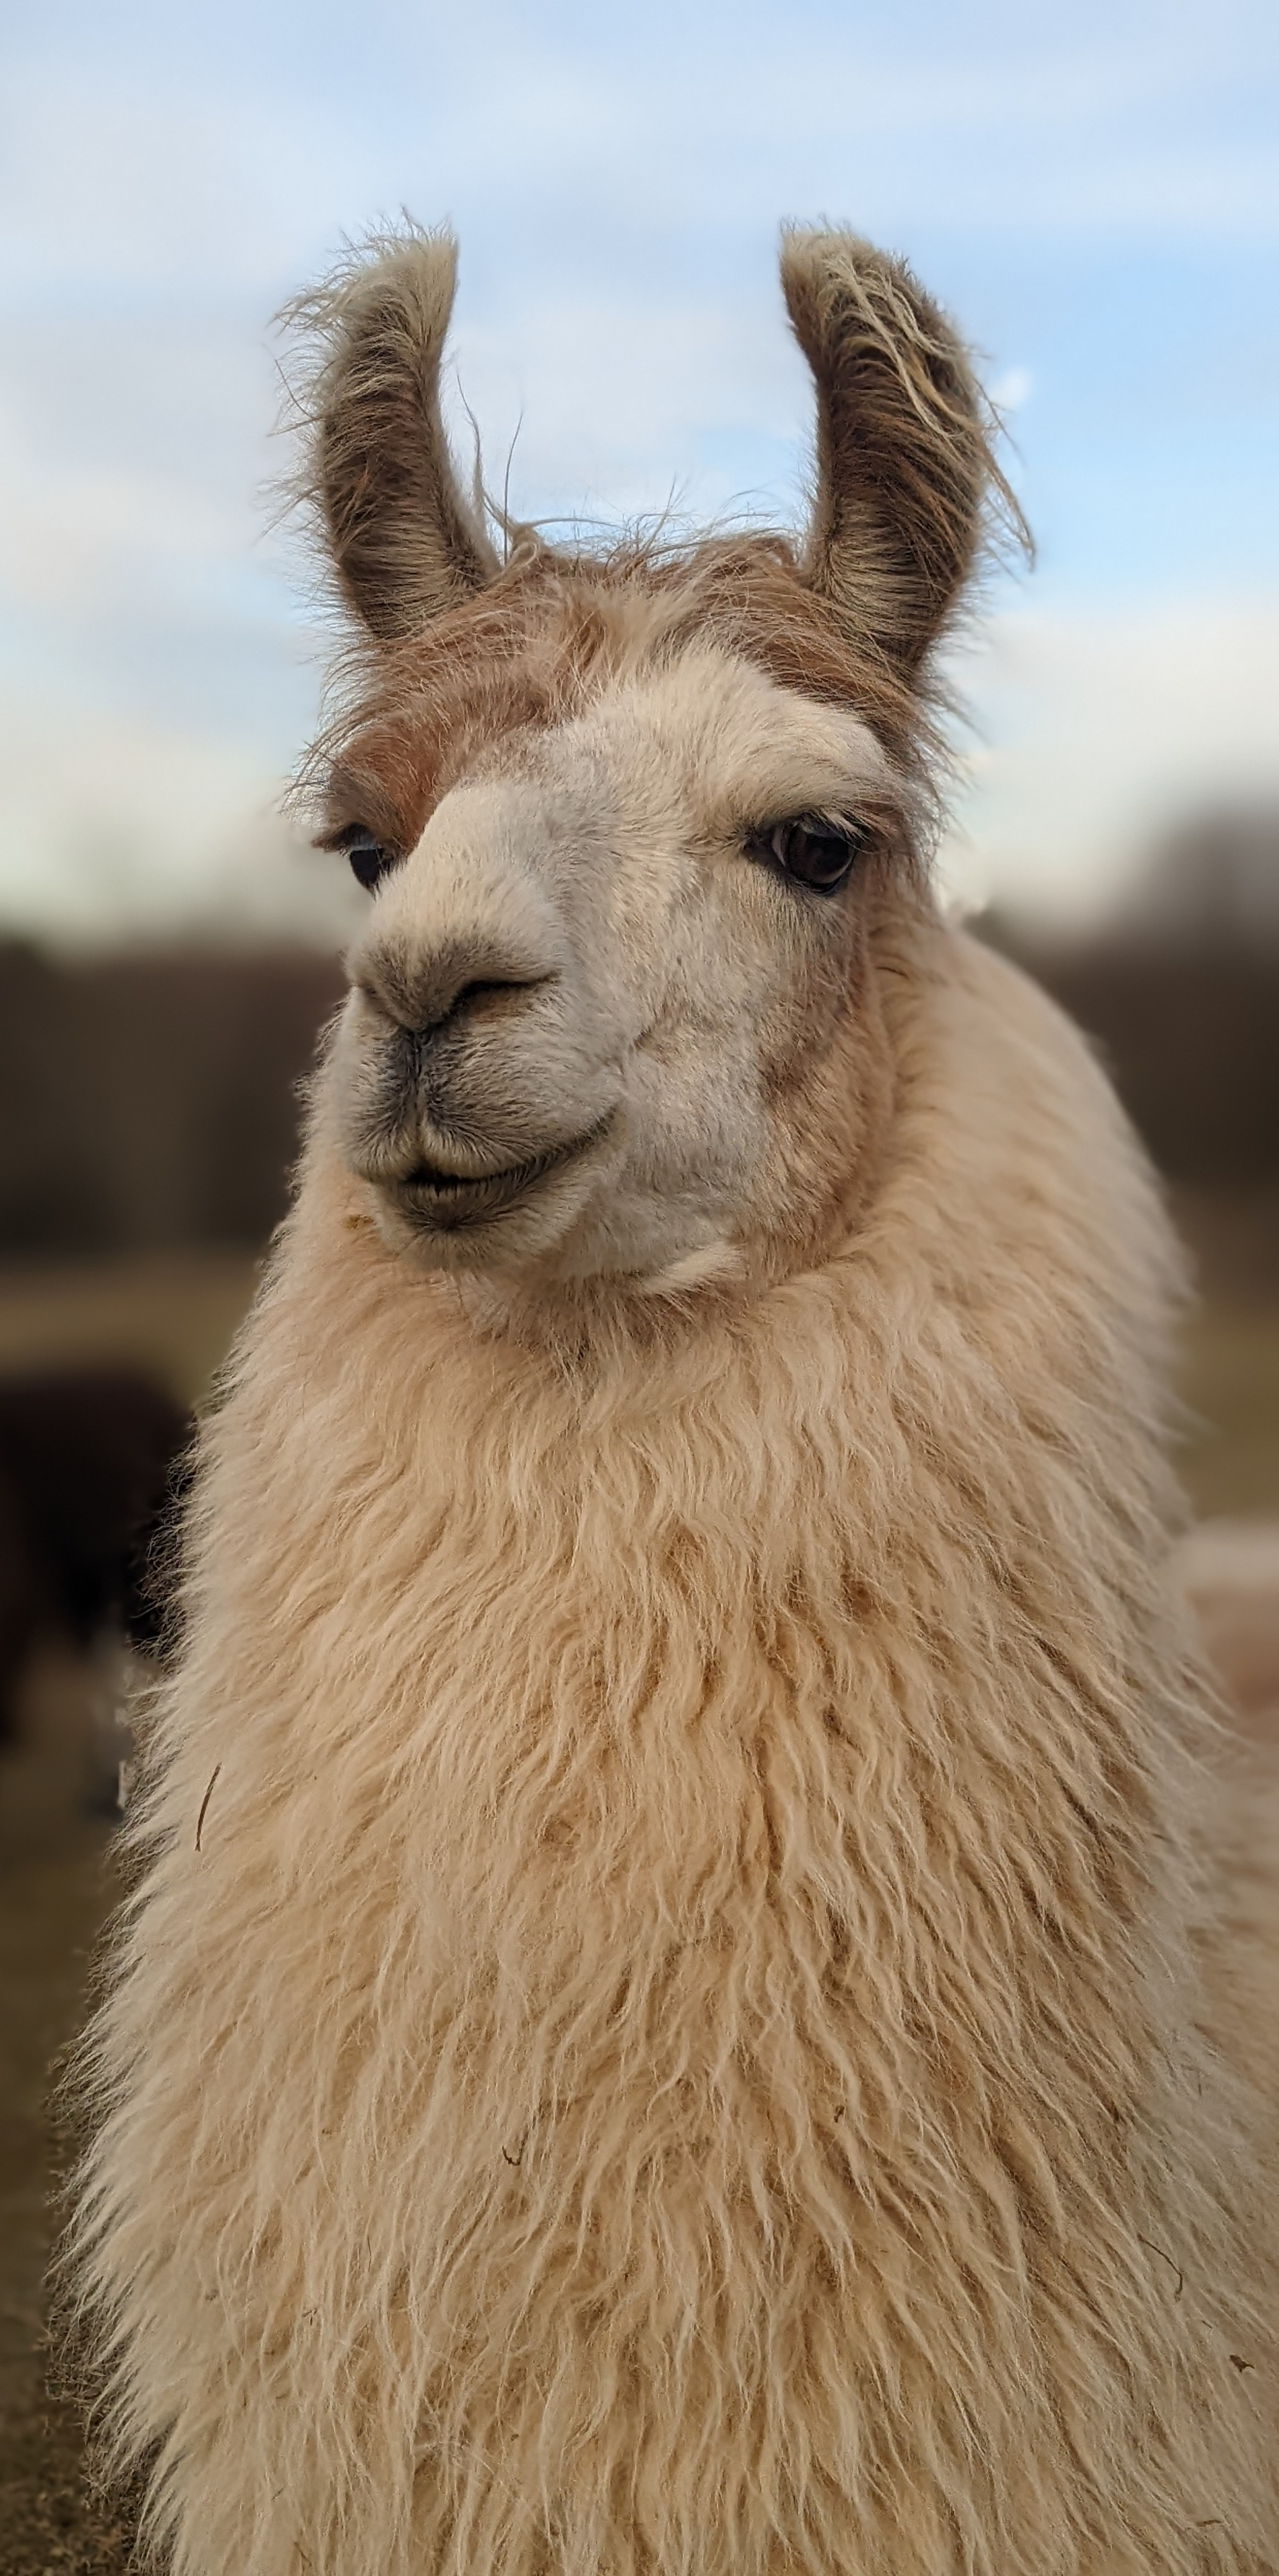 A portrait image of a llama named Boo